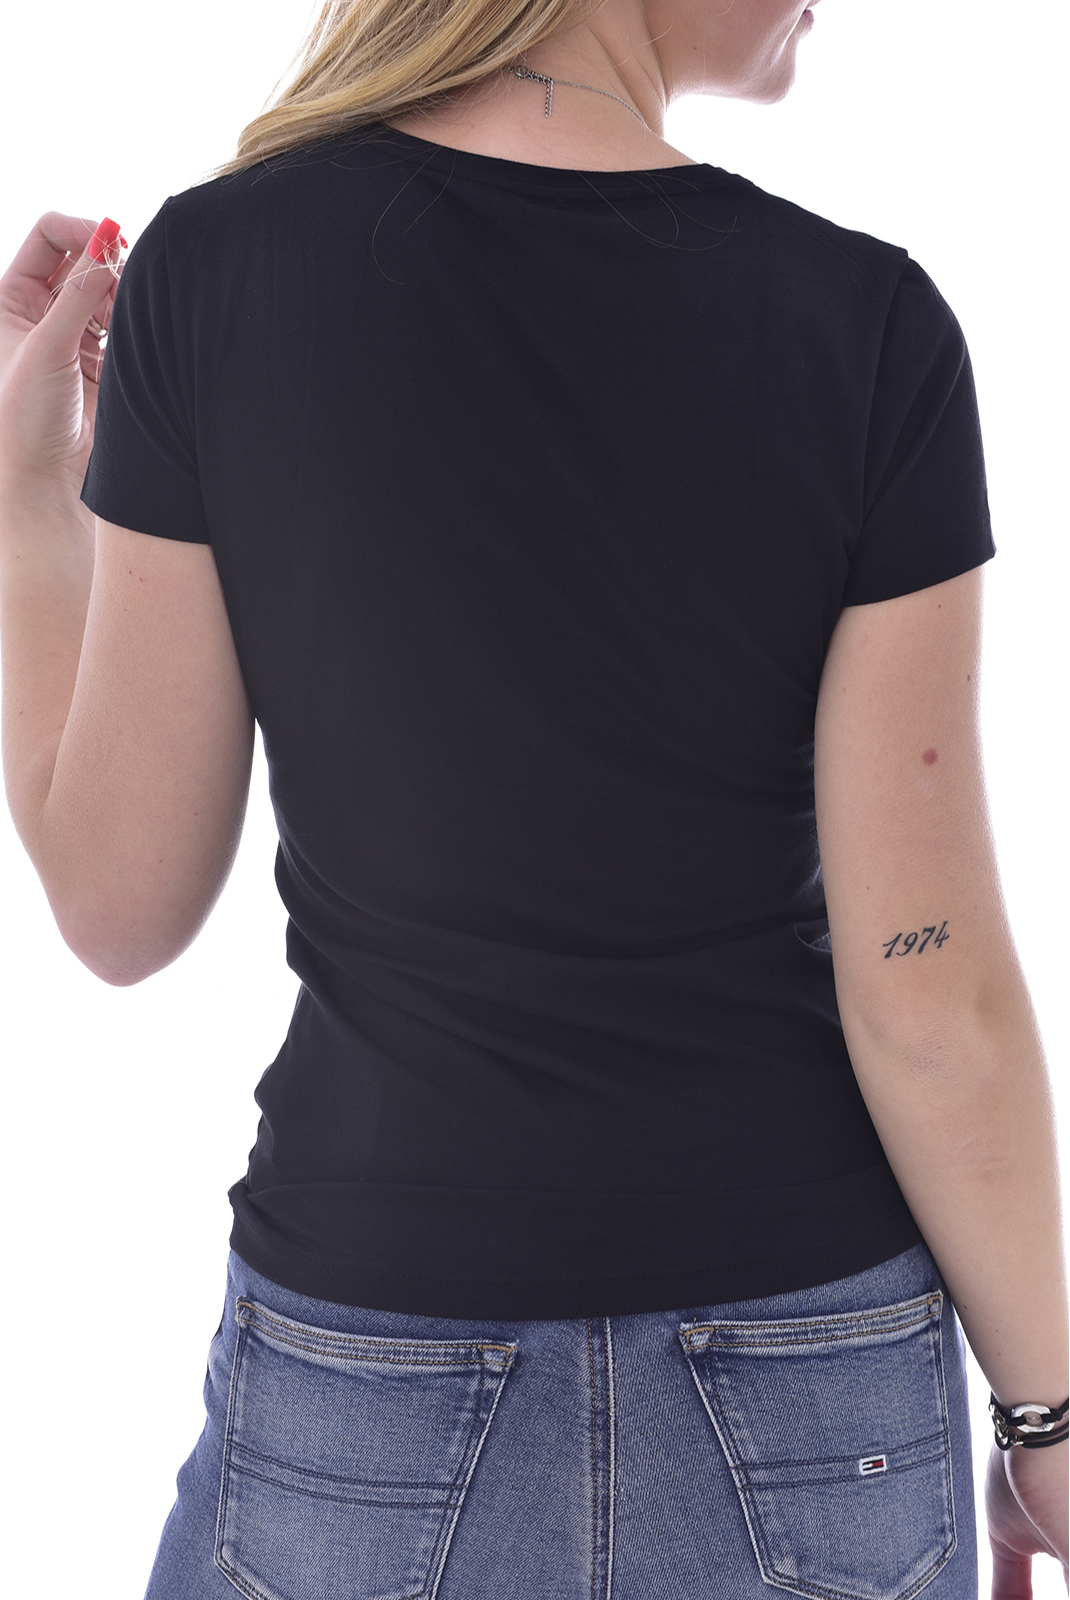 Tee-shirt noir à manches courtes Emporio Armani - 163377 1P223